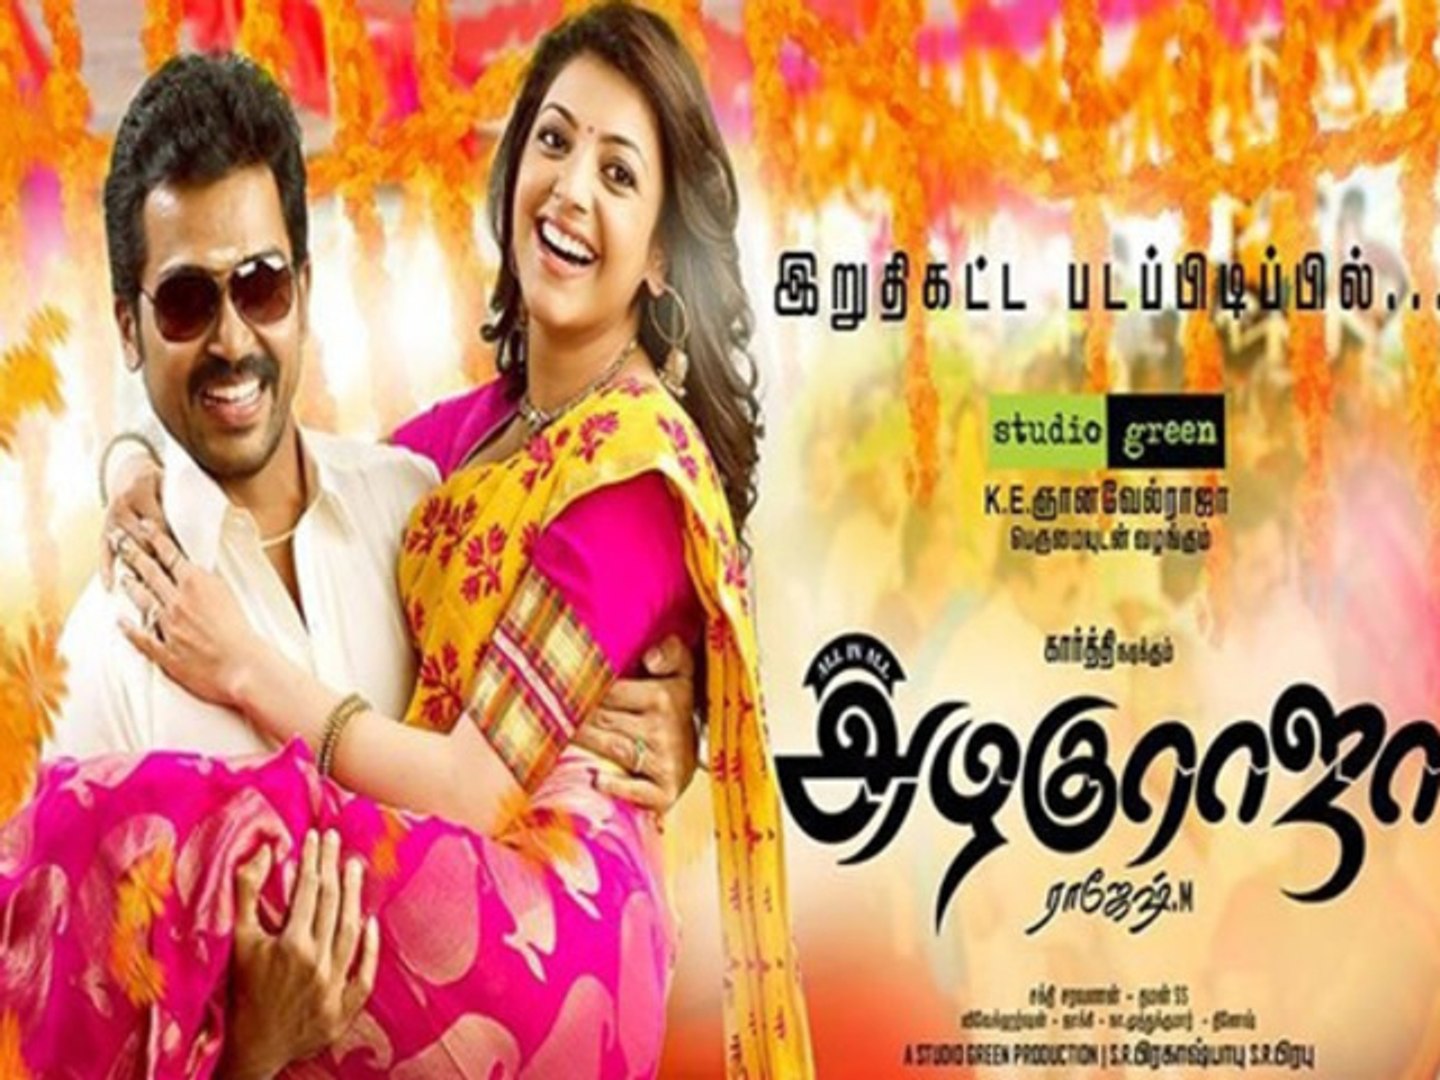 Tamil Movie "All in All Azhagu Raja" Trailer Receives Positive Response -  video Dailymotion